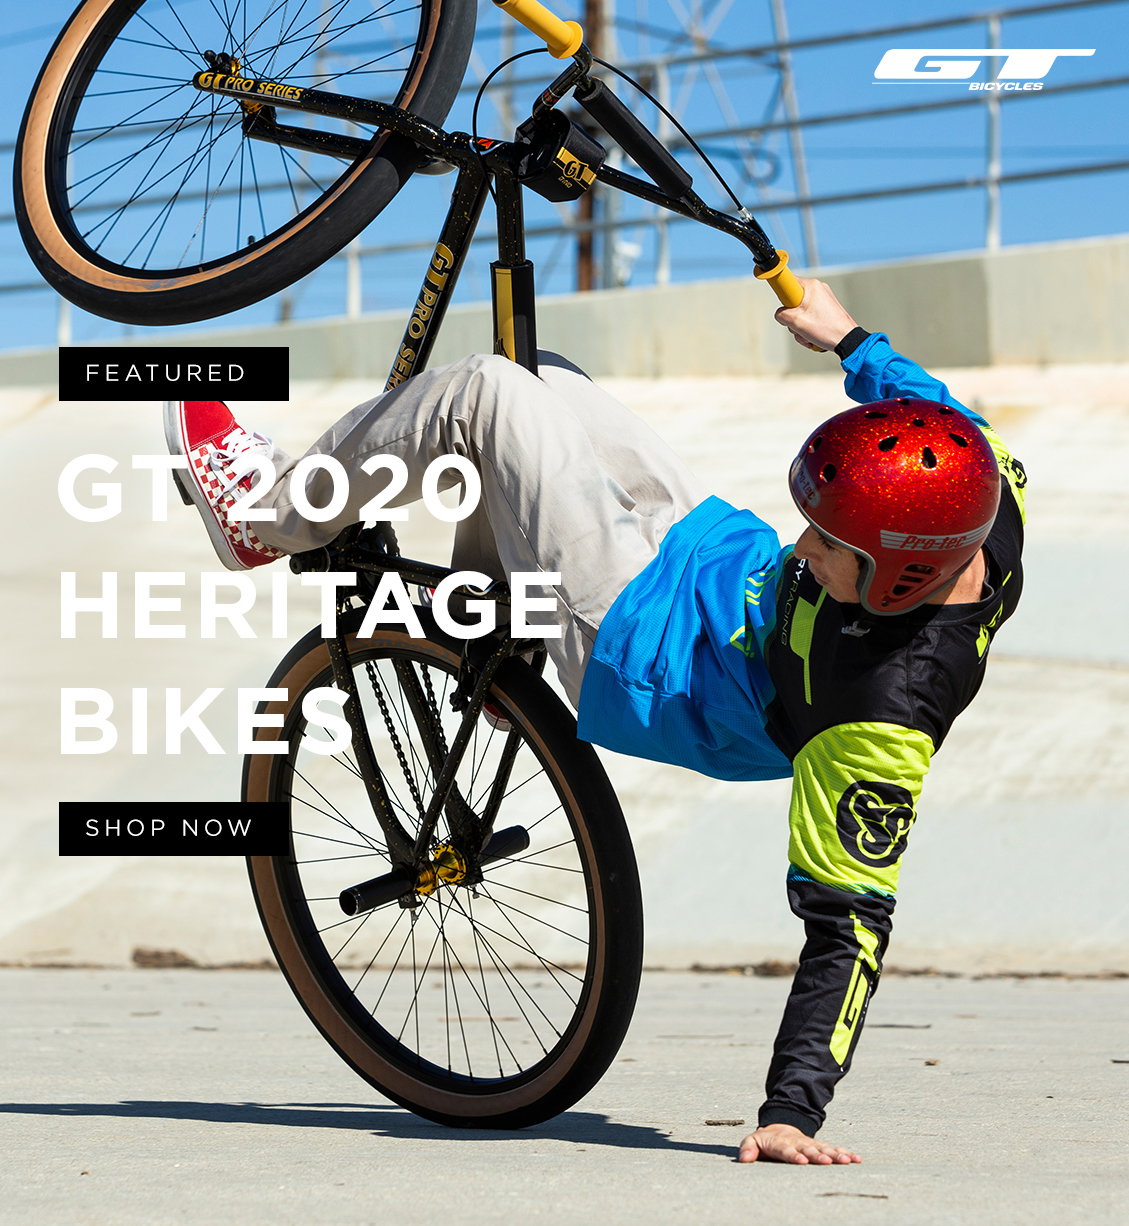 gt pro series heritage 29 bmx bike 2020